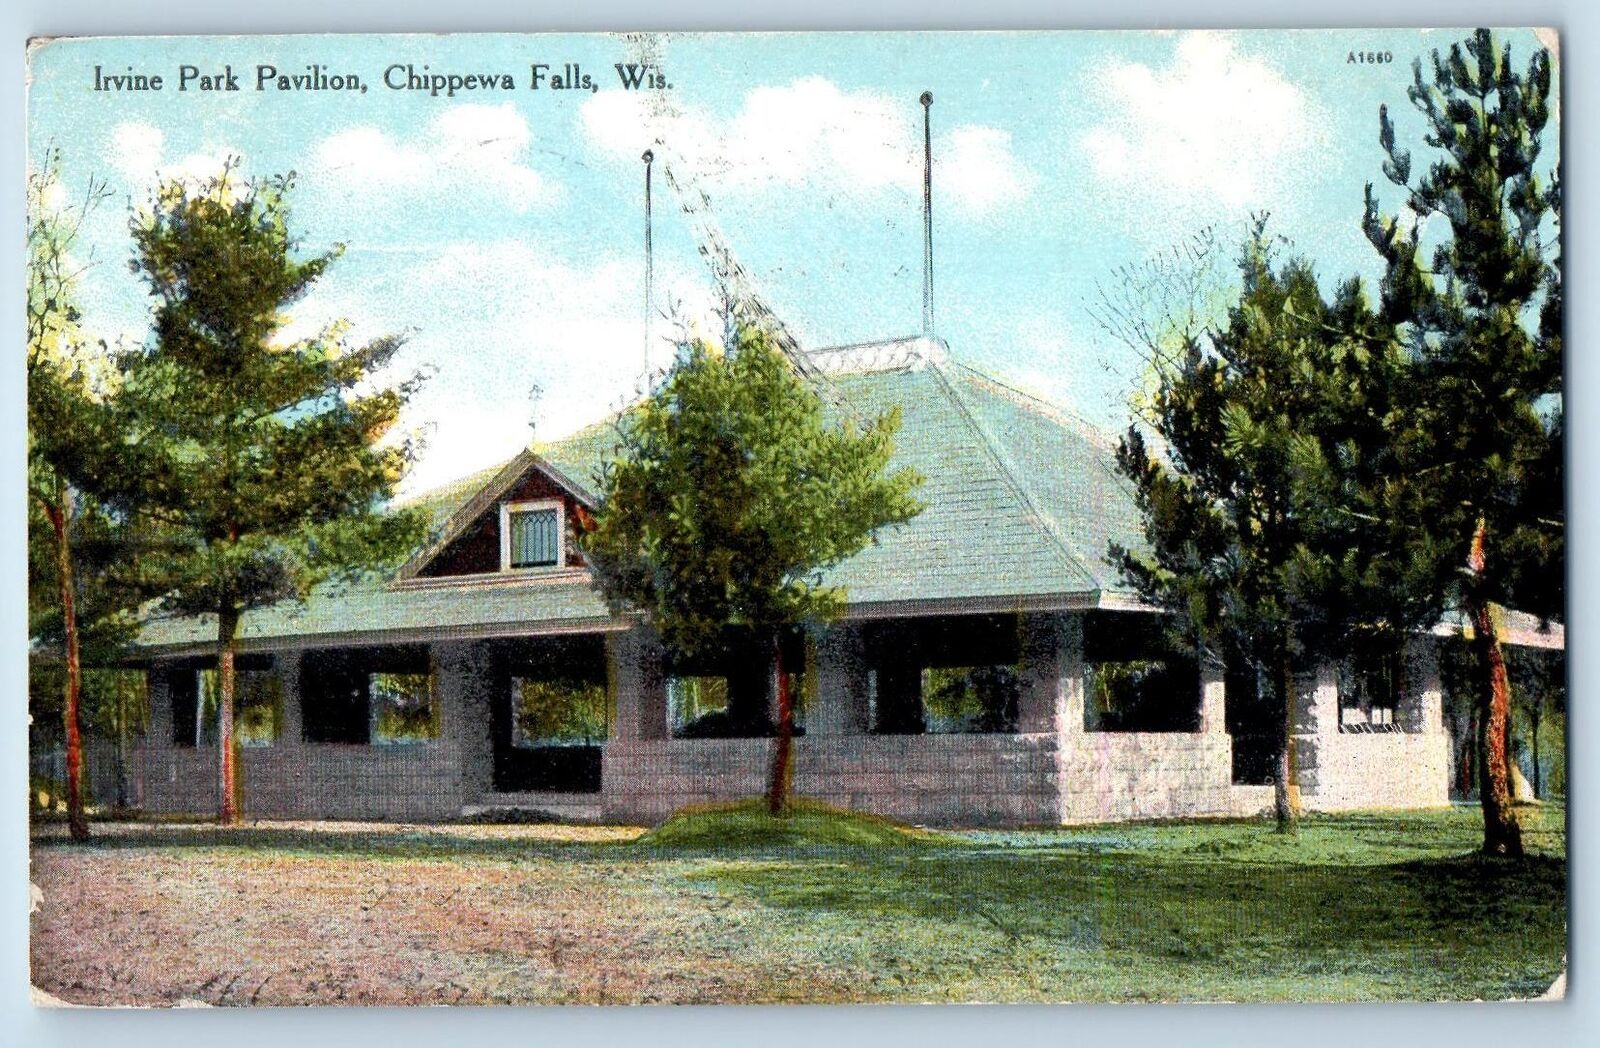 Chippewa Falls Wisconsin WI Postcard Irvine Park Pavilion Scenic View 1910